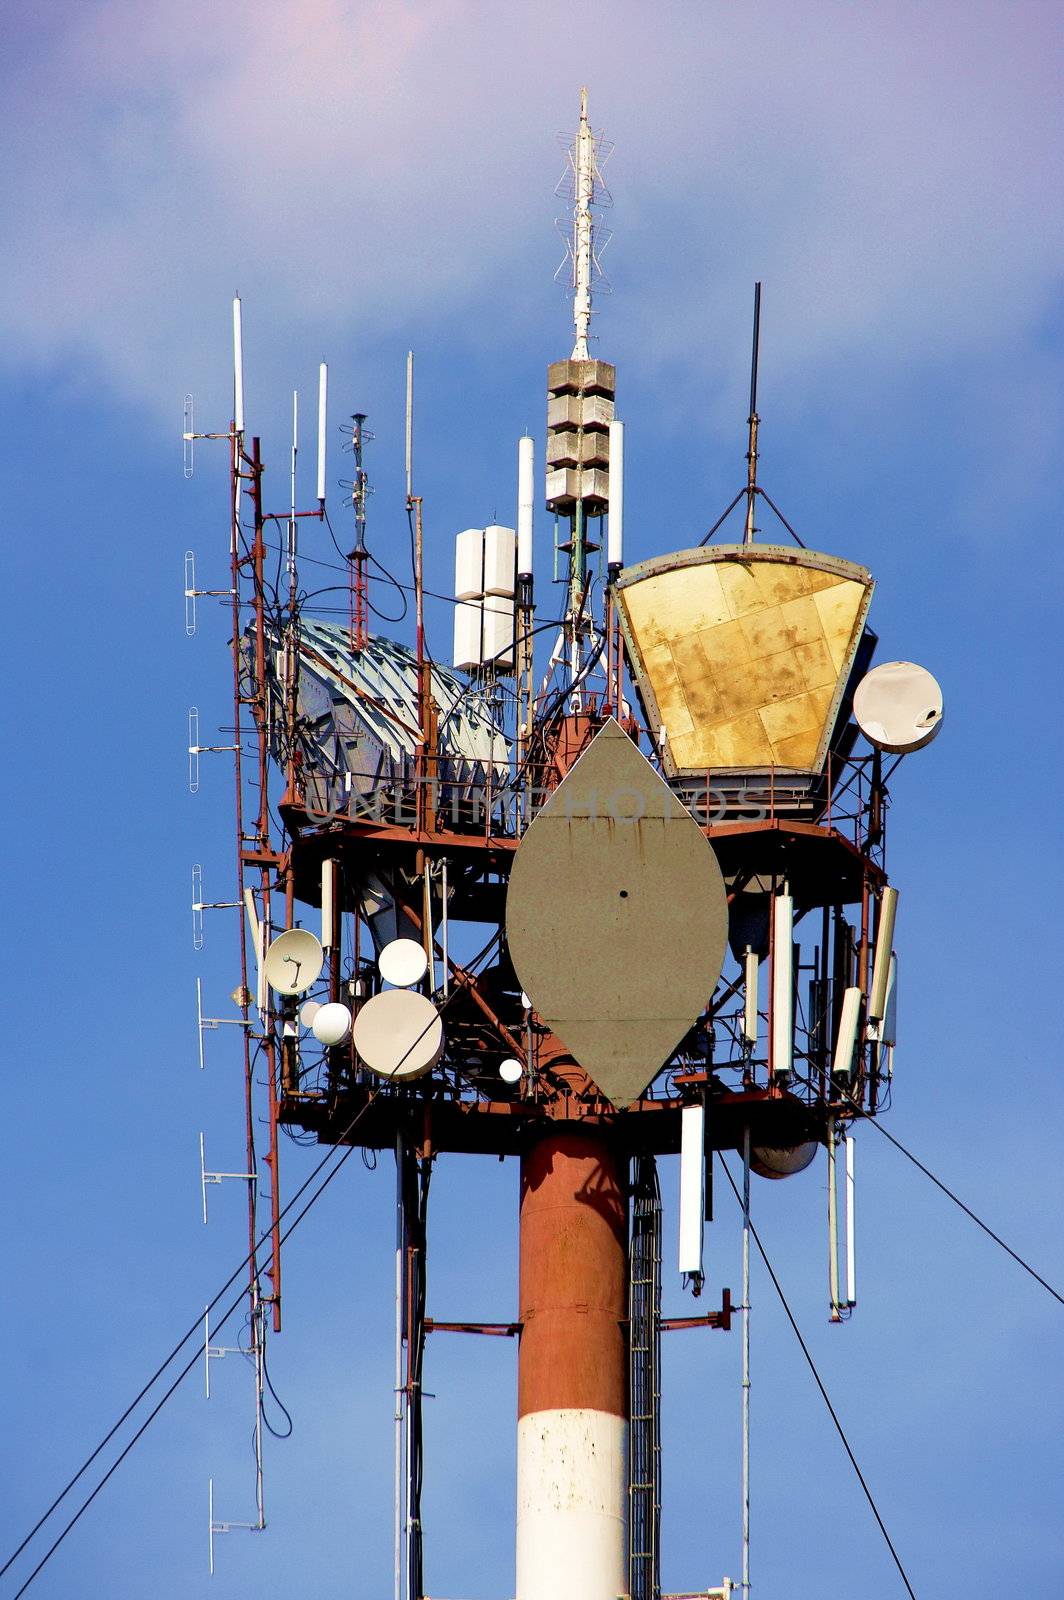 Peak of communication Hi-Tek mast with lights and antennas